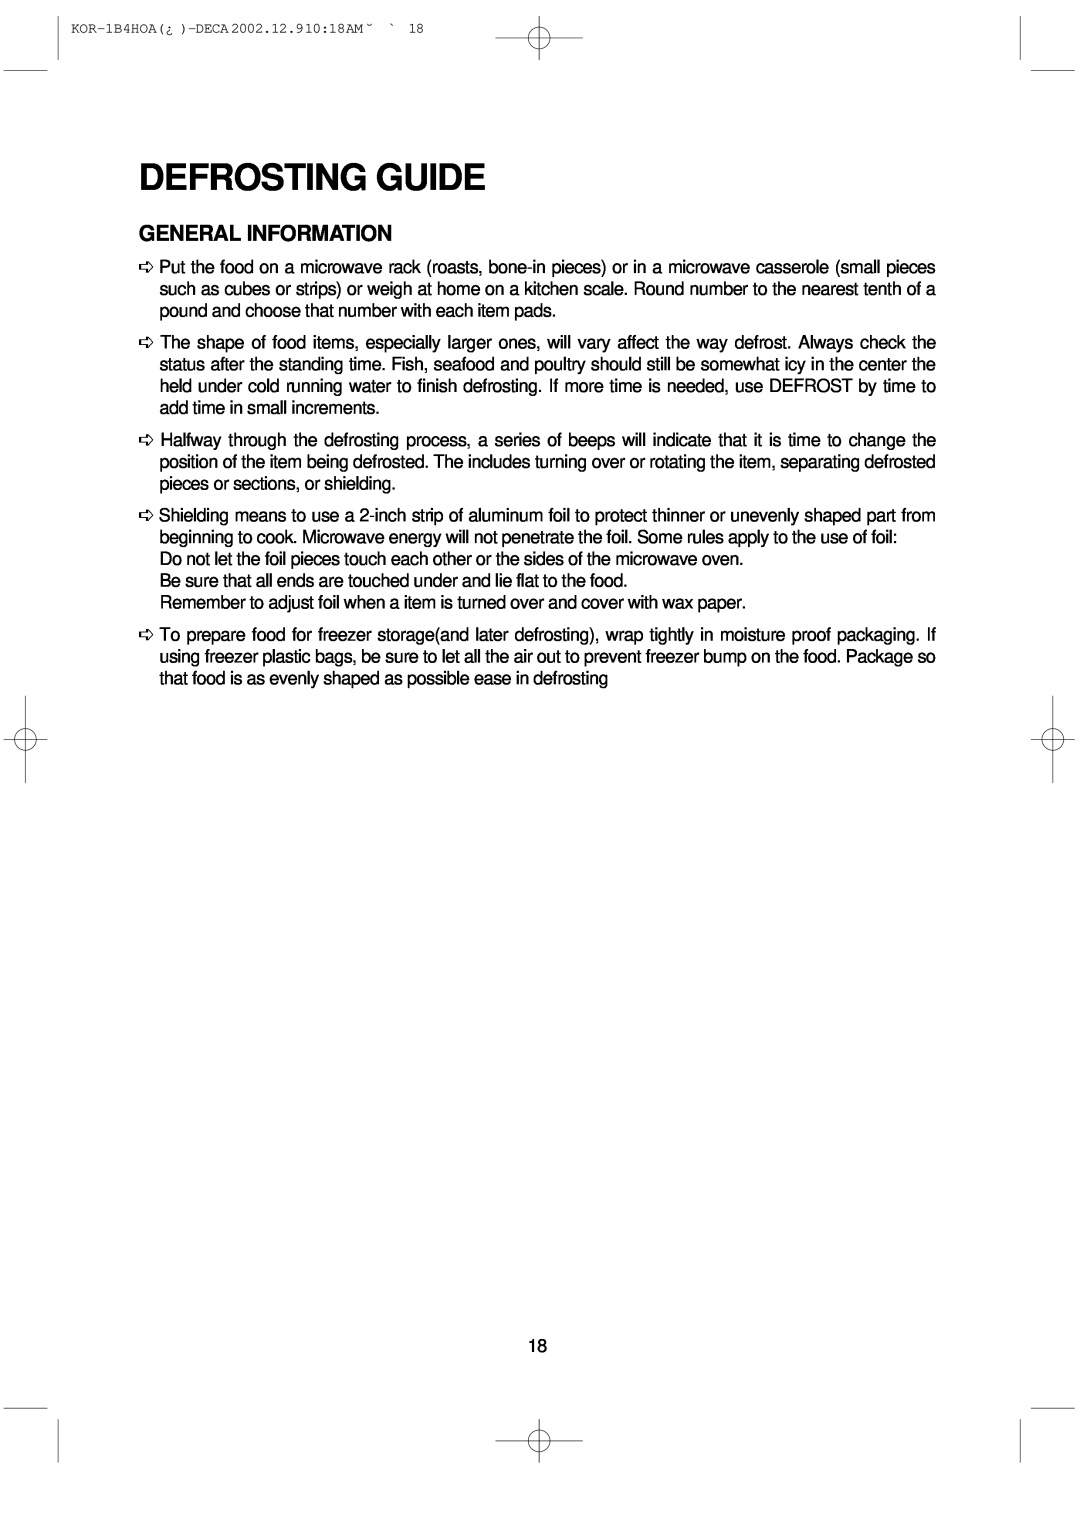 Daewoo KOR-1B4H manual Defrosting Guide, General Information 